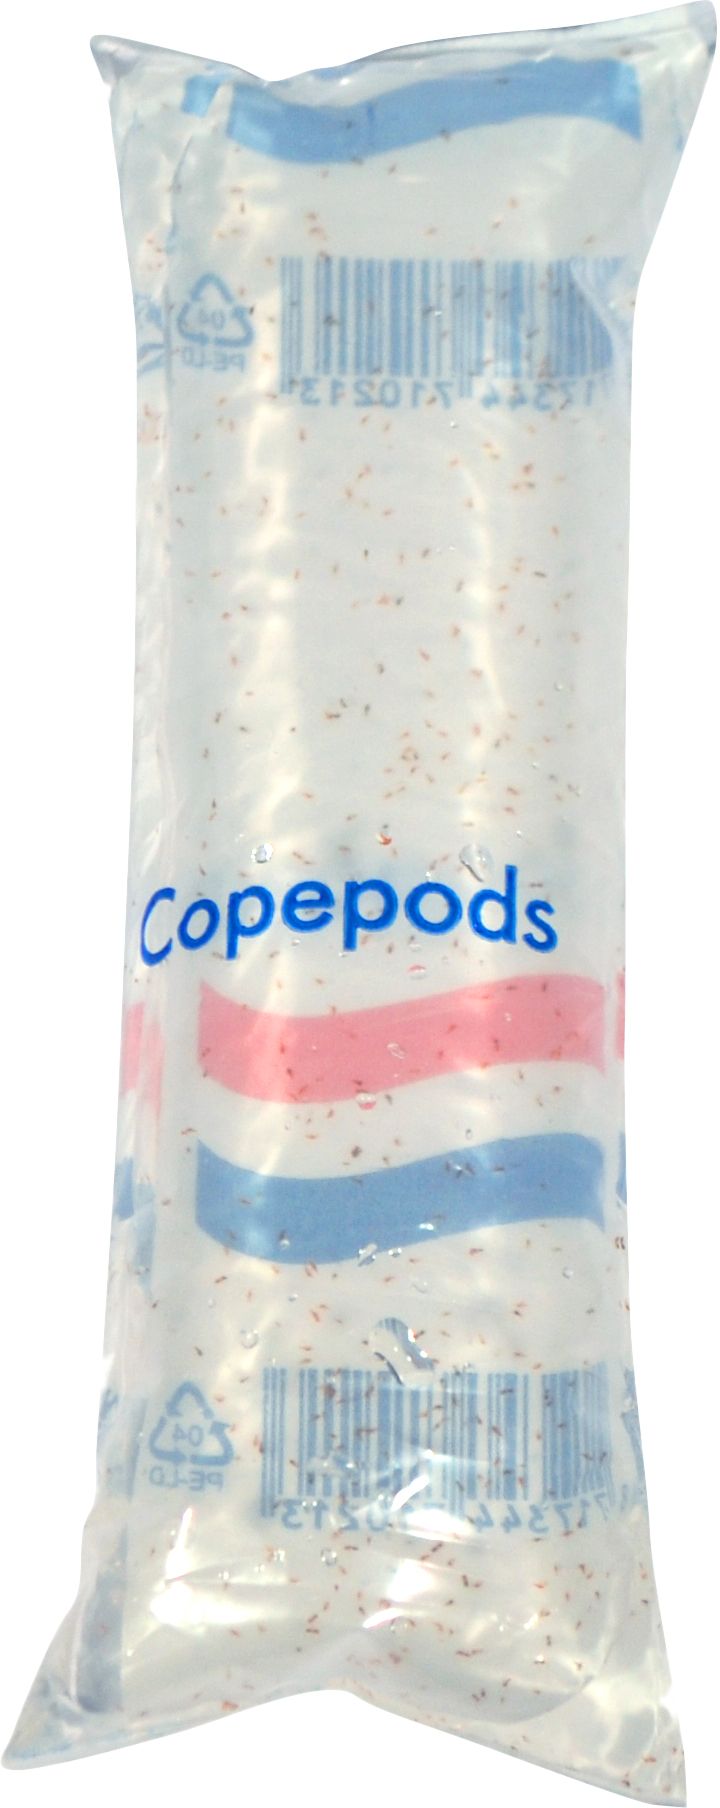 Live Copepods